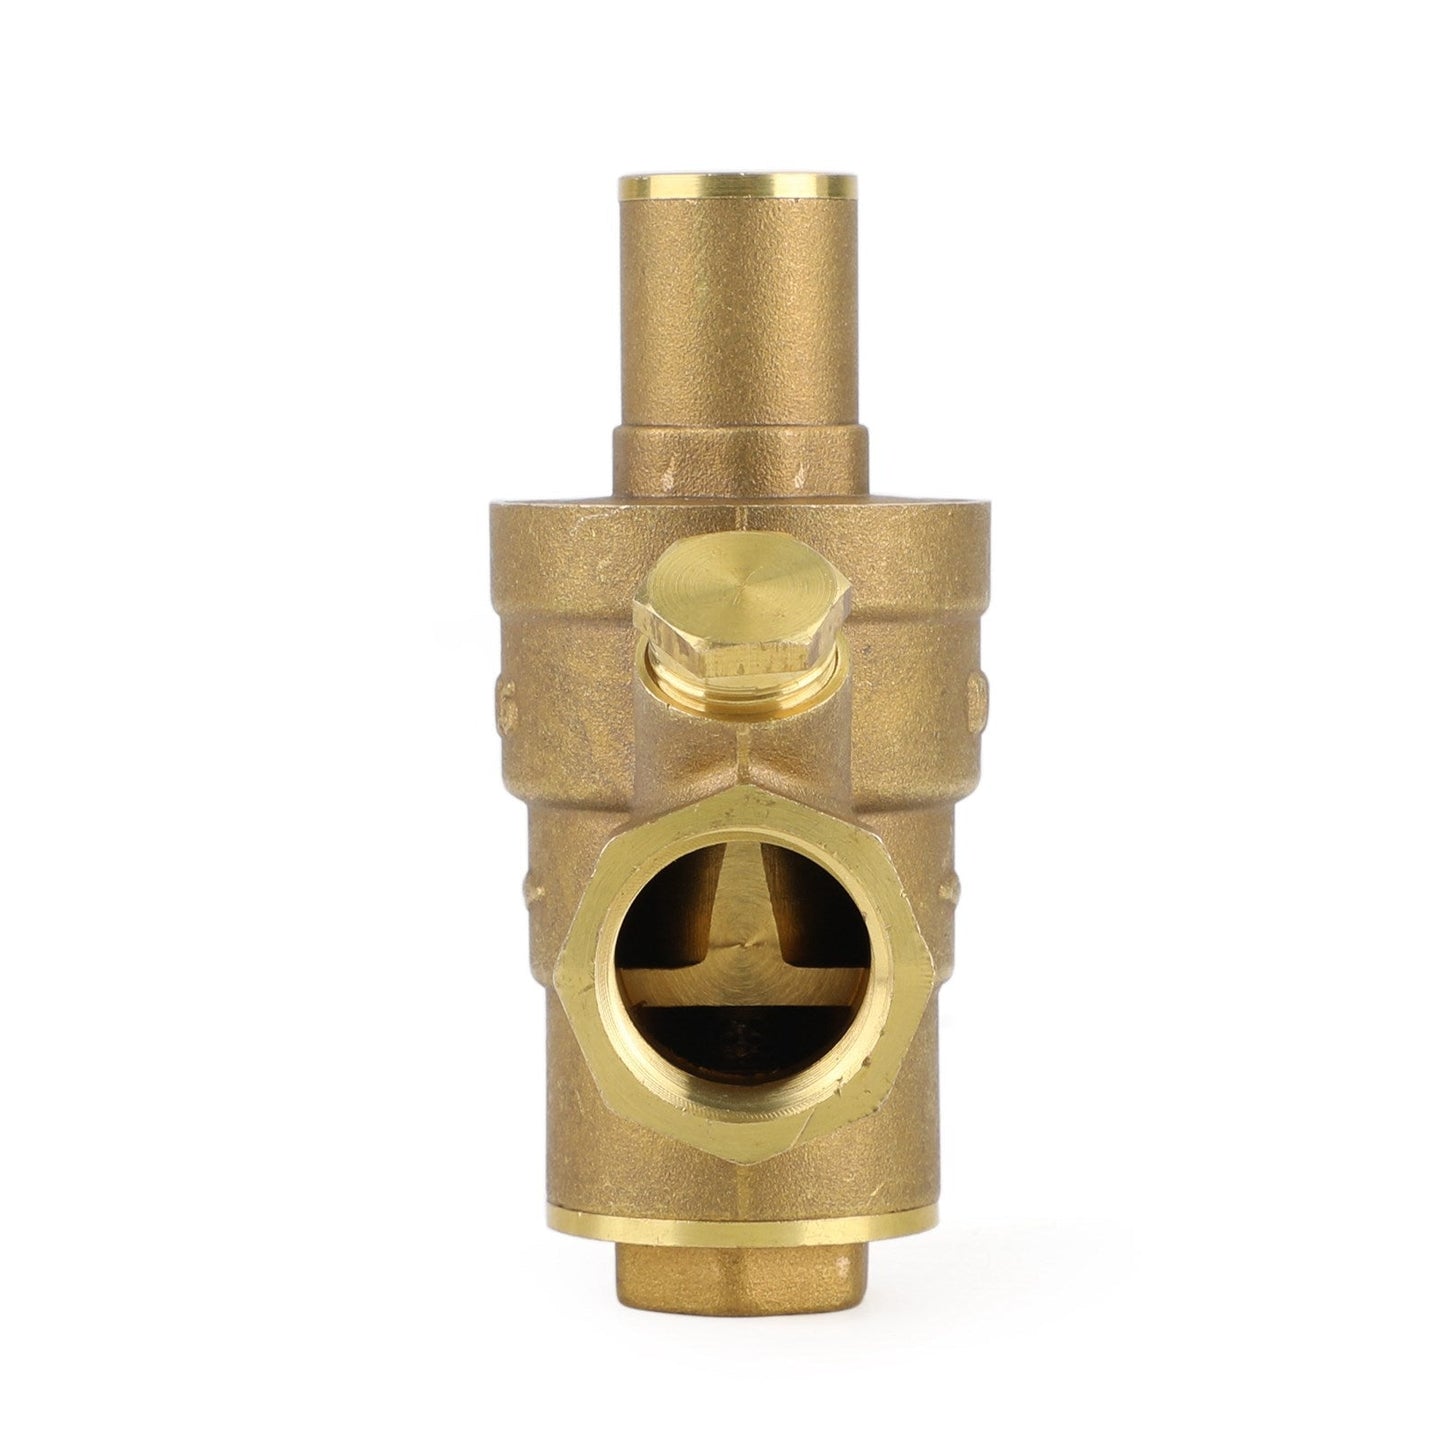 DN15 Brass Adjustable 1/2" Water Pressure Regulator Reducer With Gauge Meter